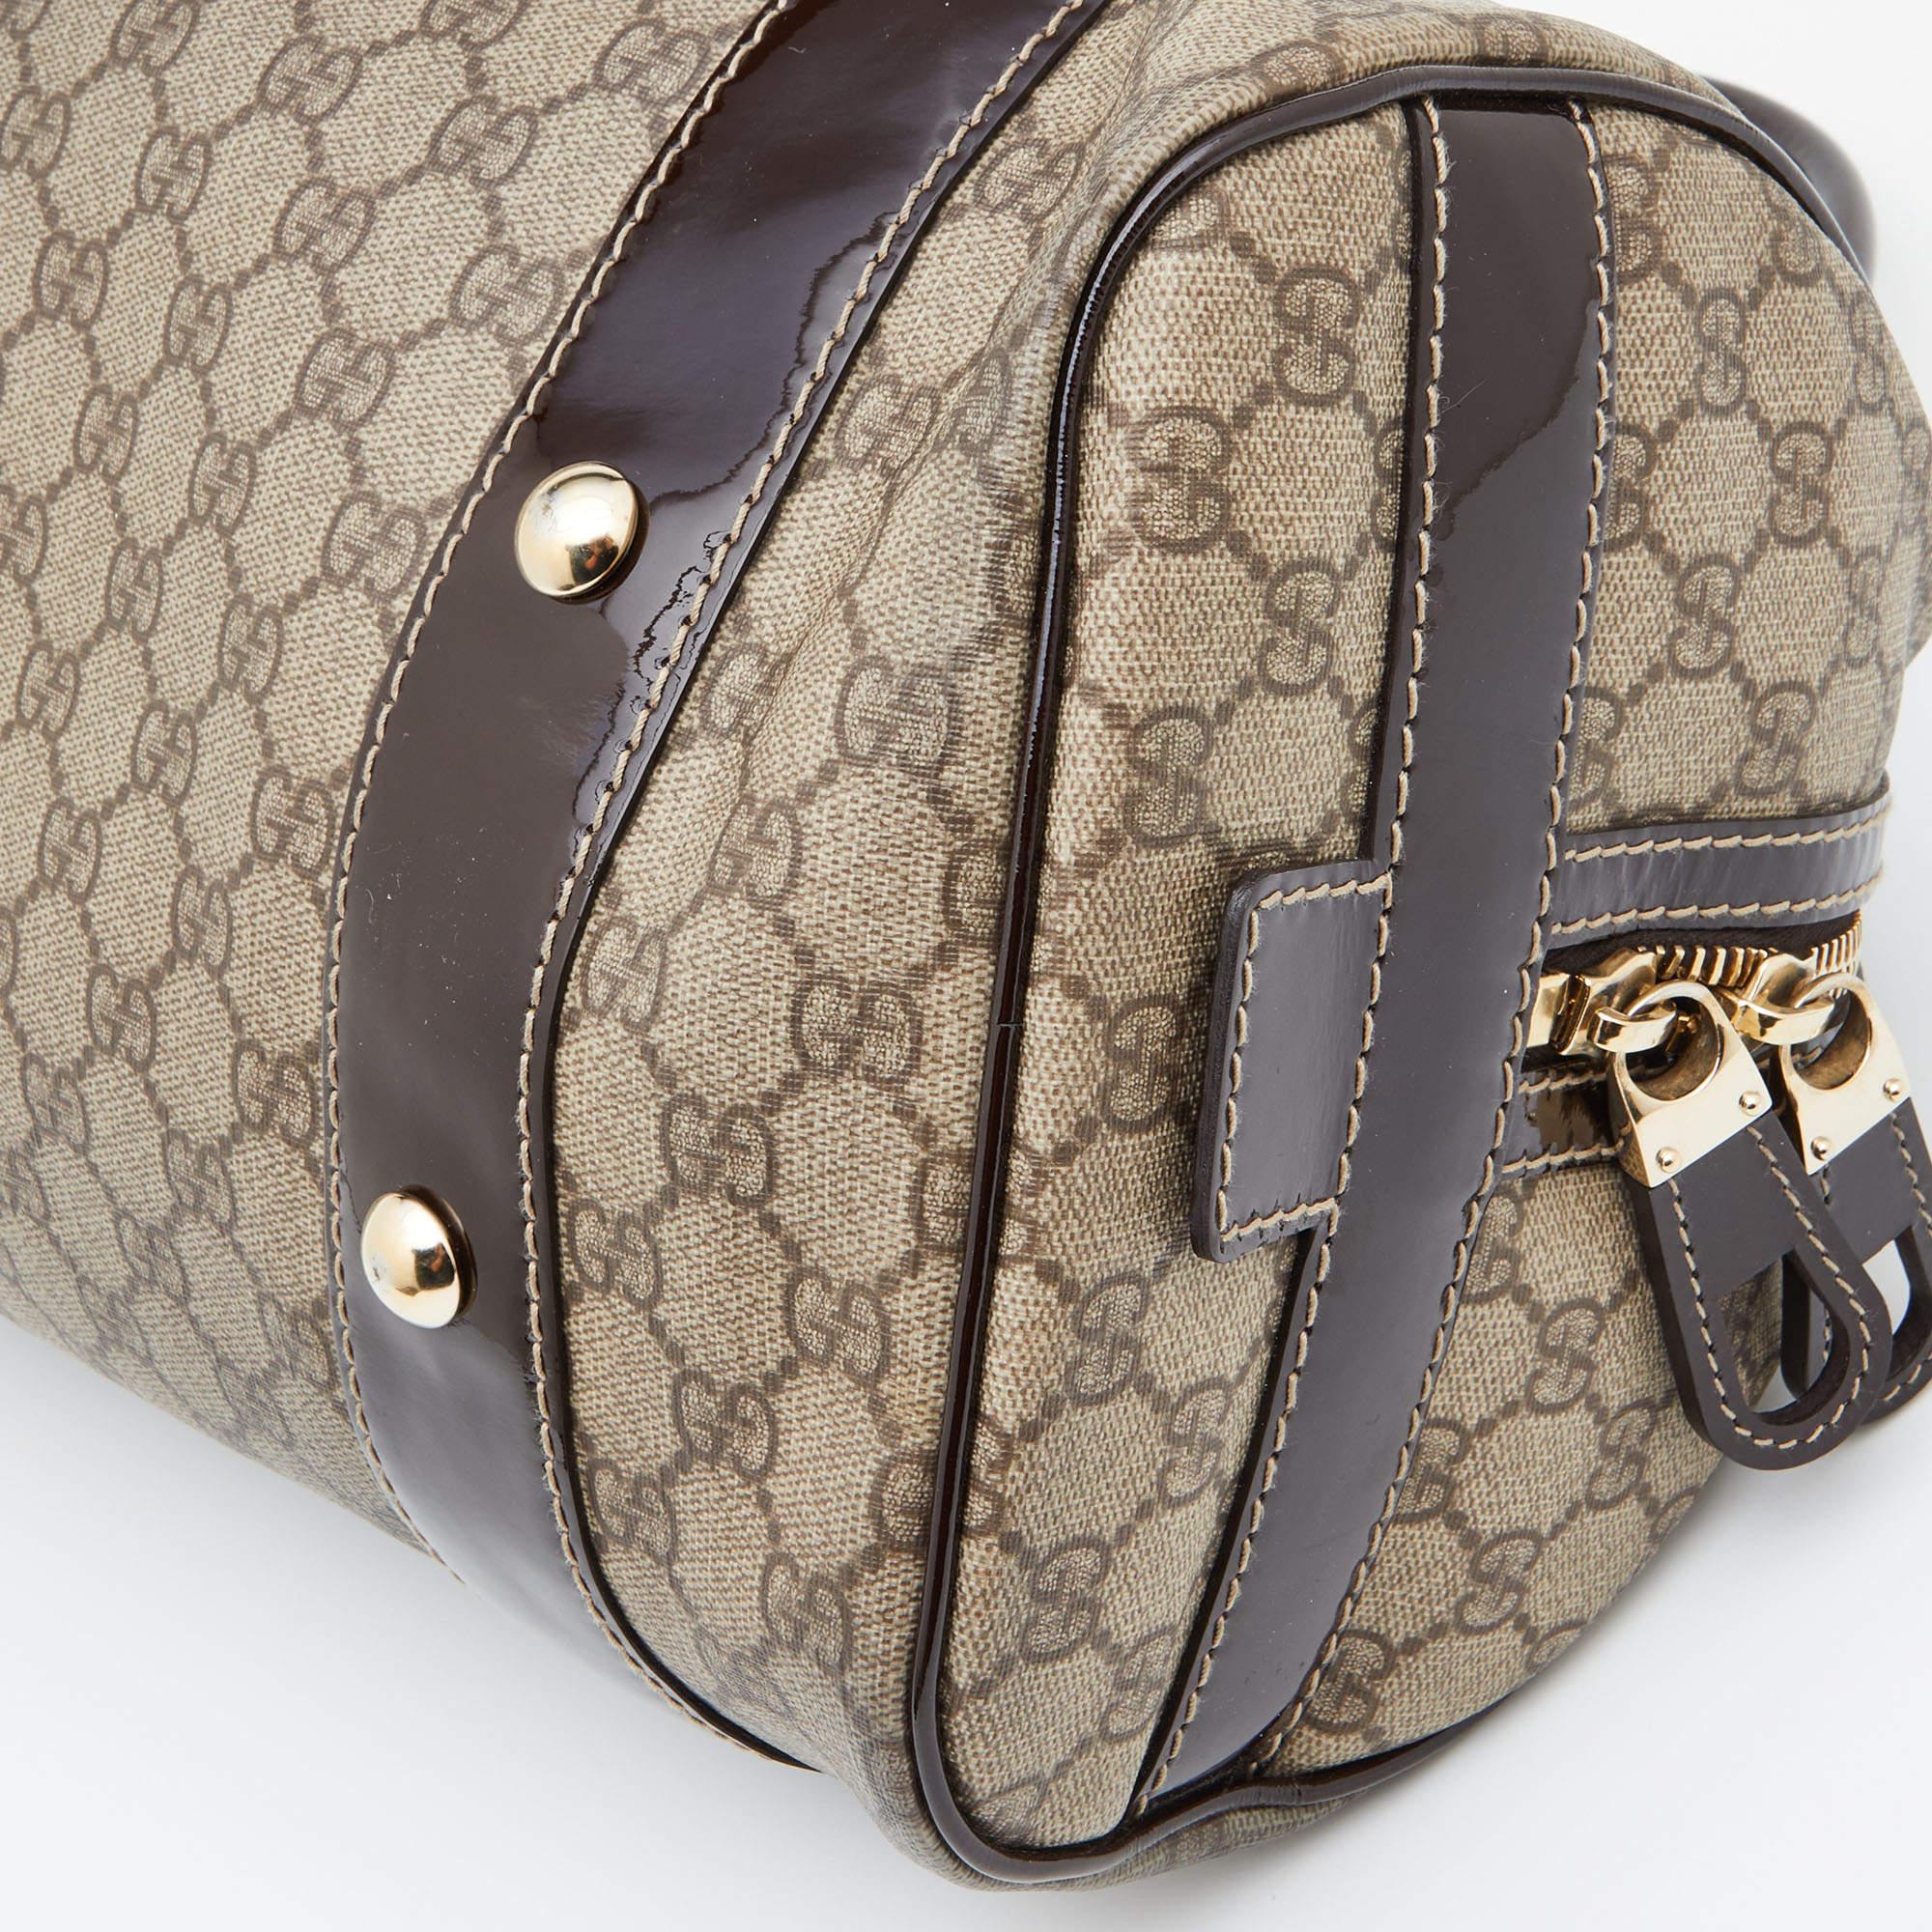 Gucci Beige/Brown GG Supreme Canvas and Patent Leather Boston Bag 2